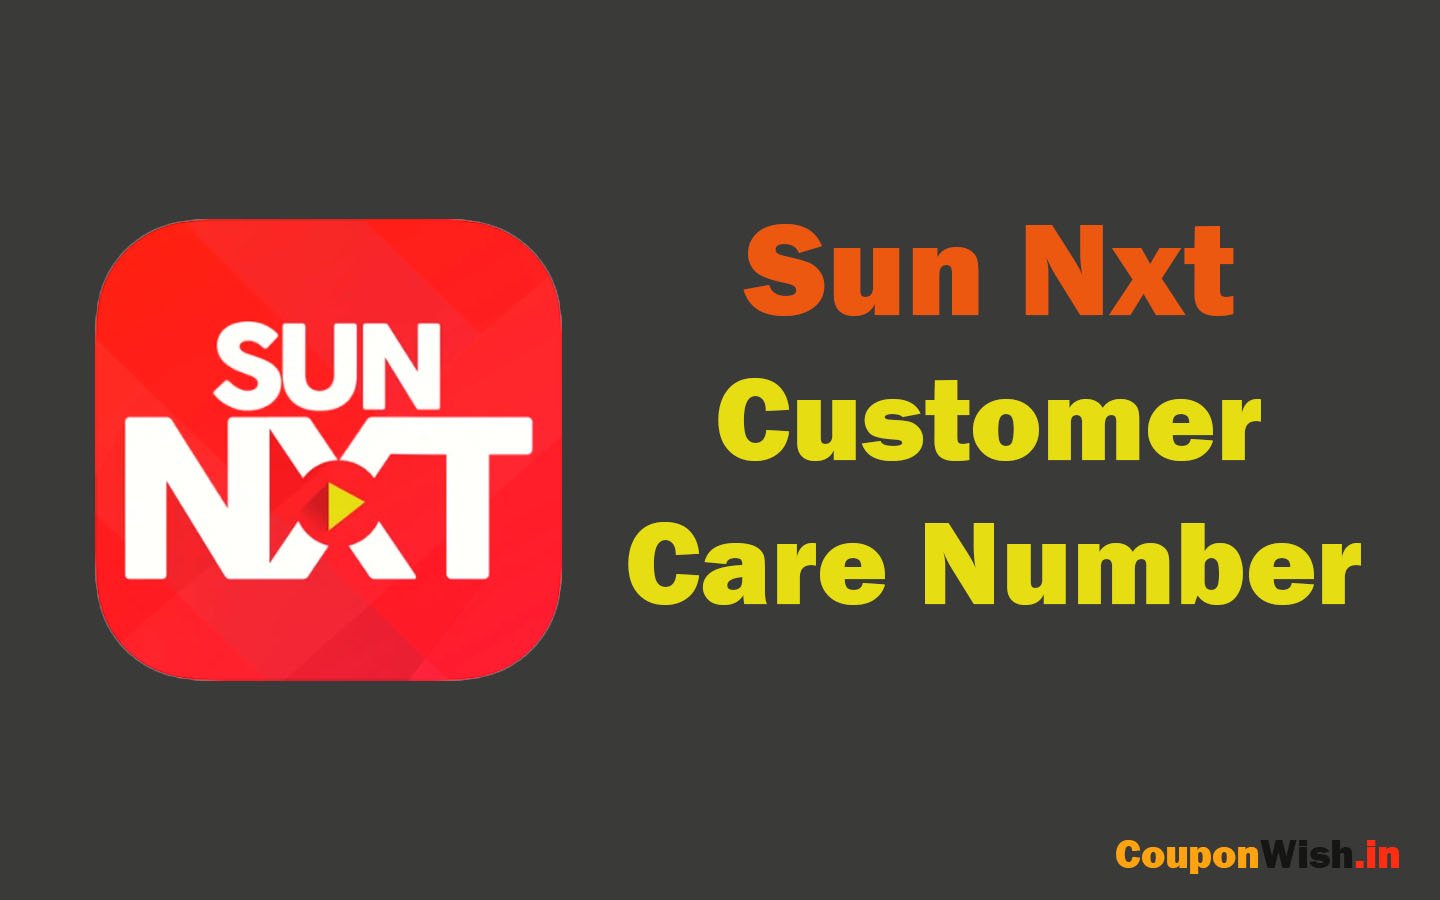 Sun Nxt Customer Care Number